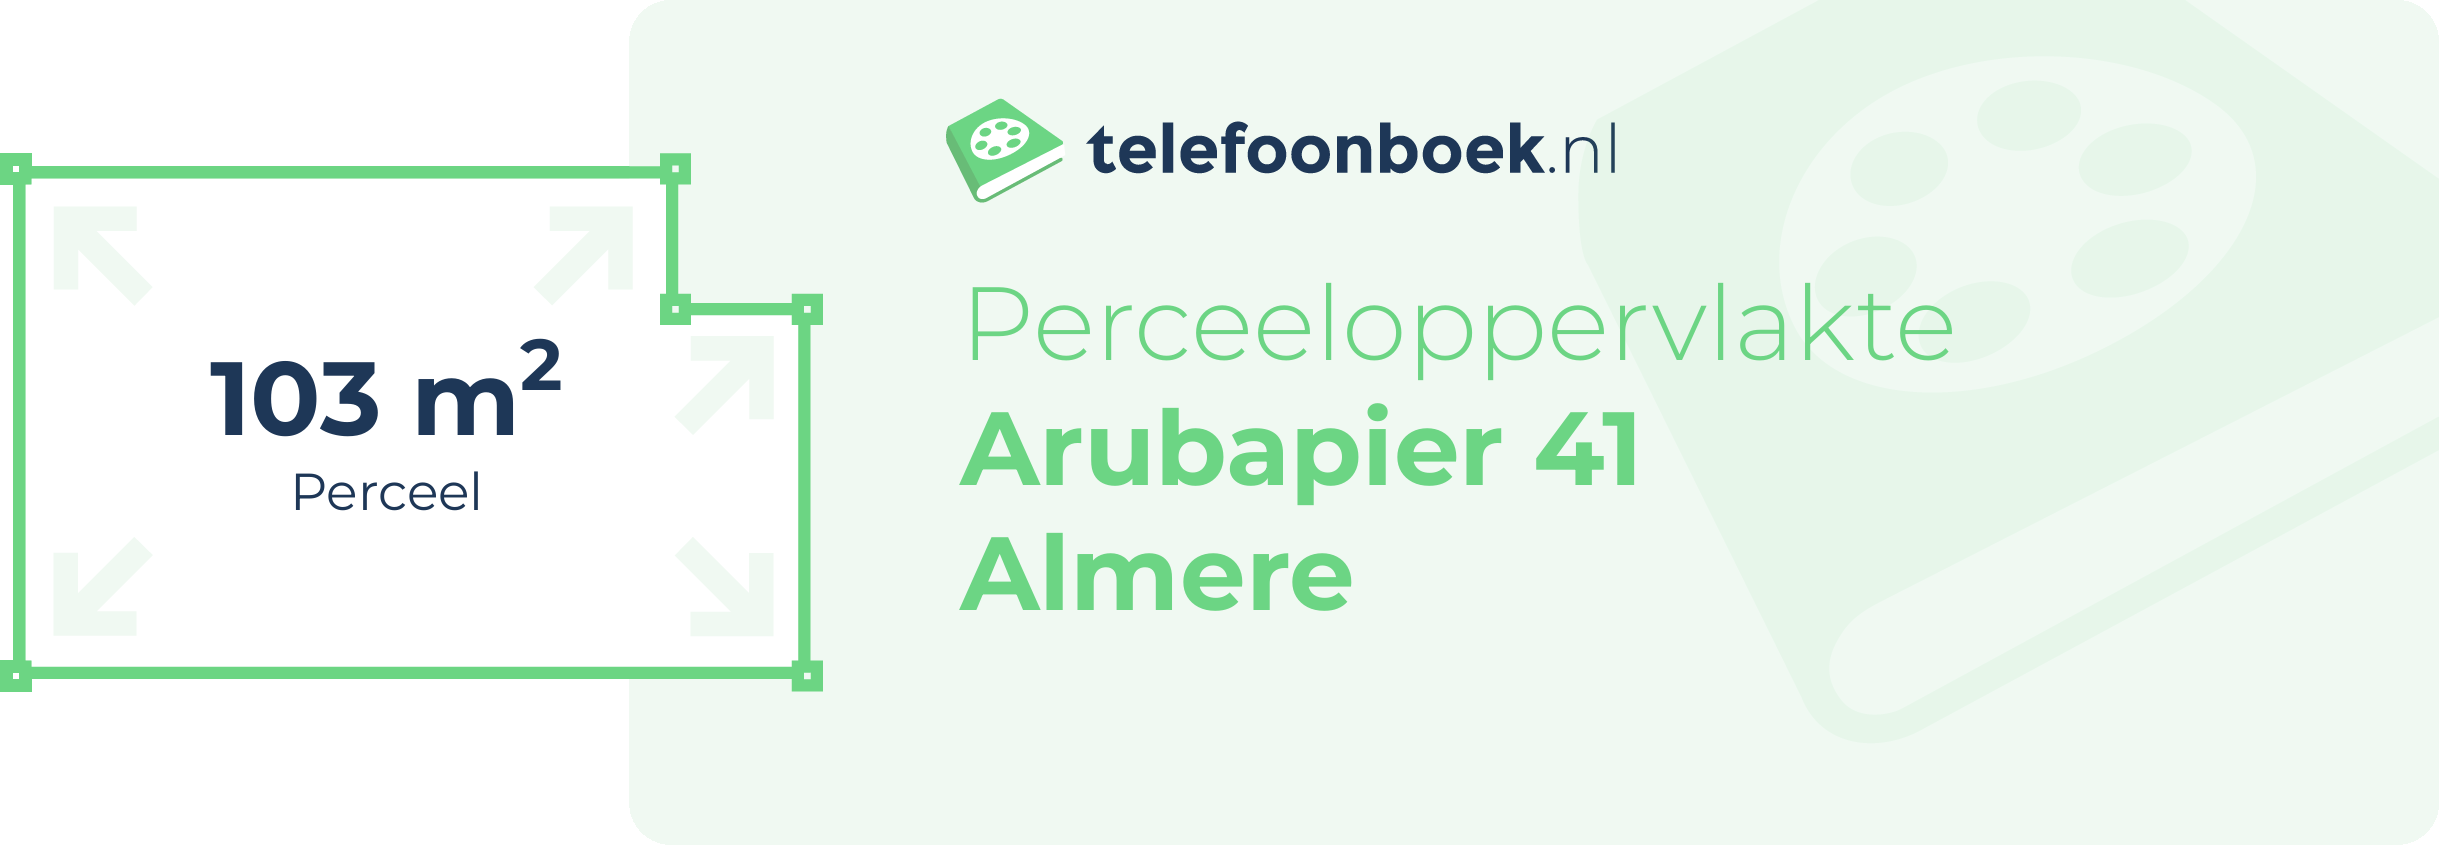 Perceeloppervlakte Arubapier 41 Almere